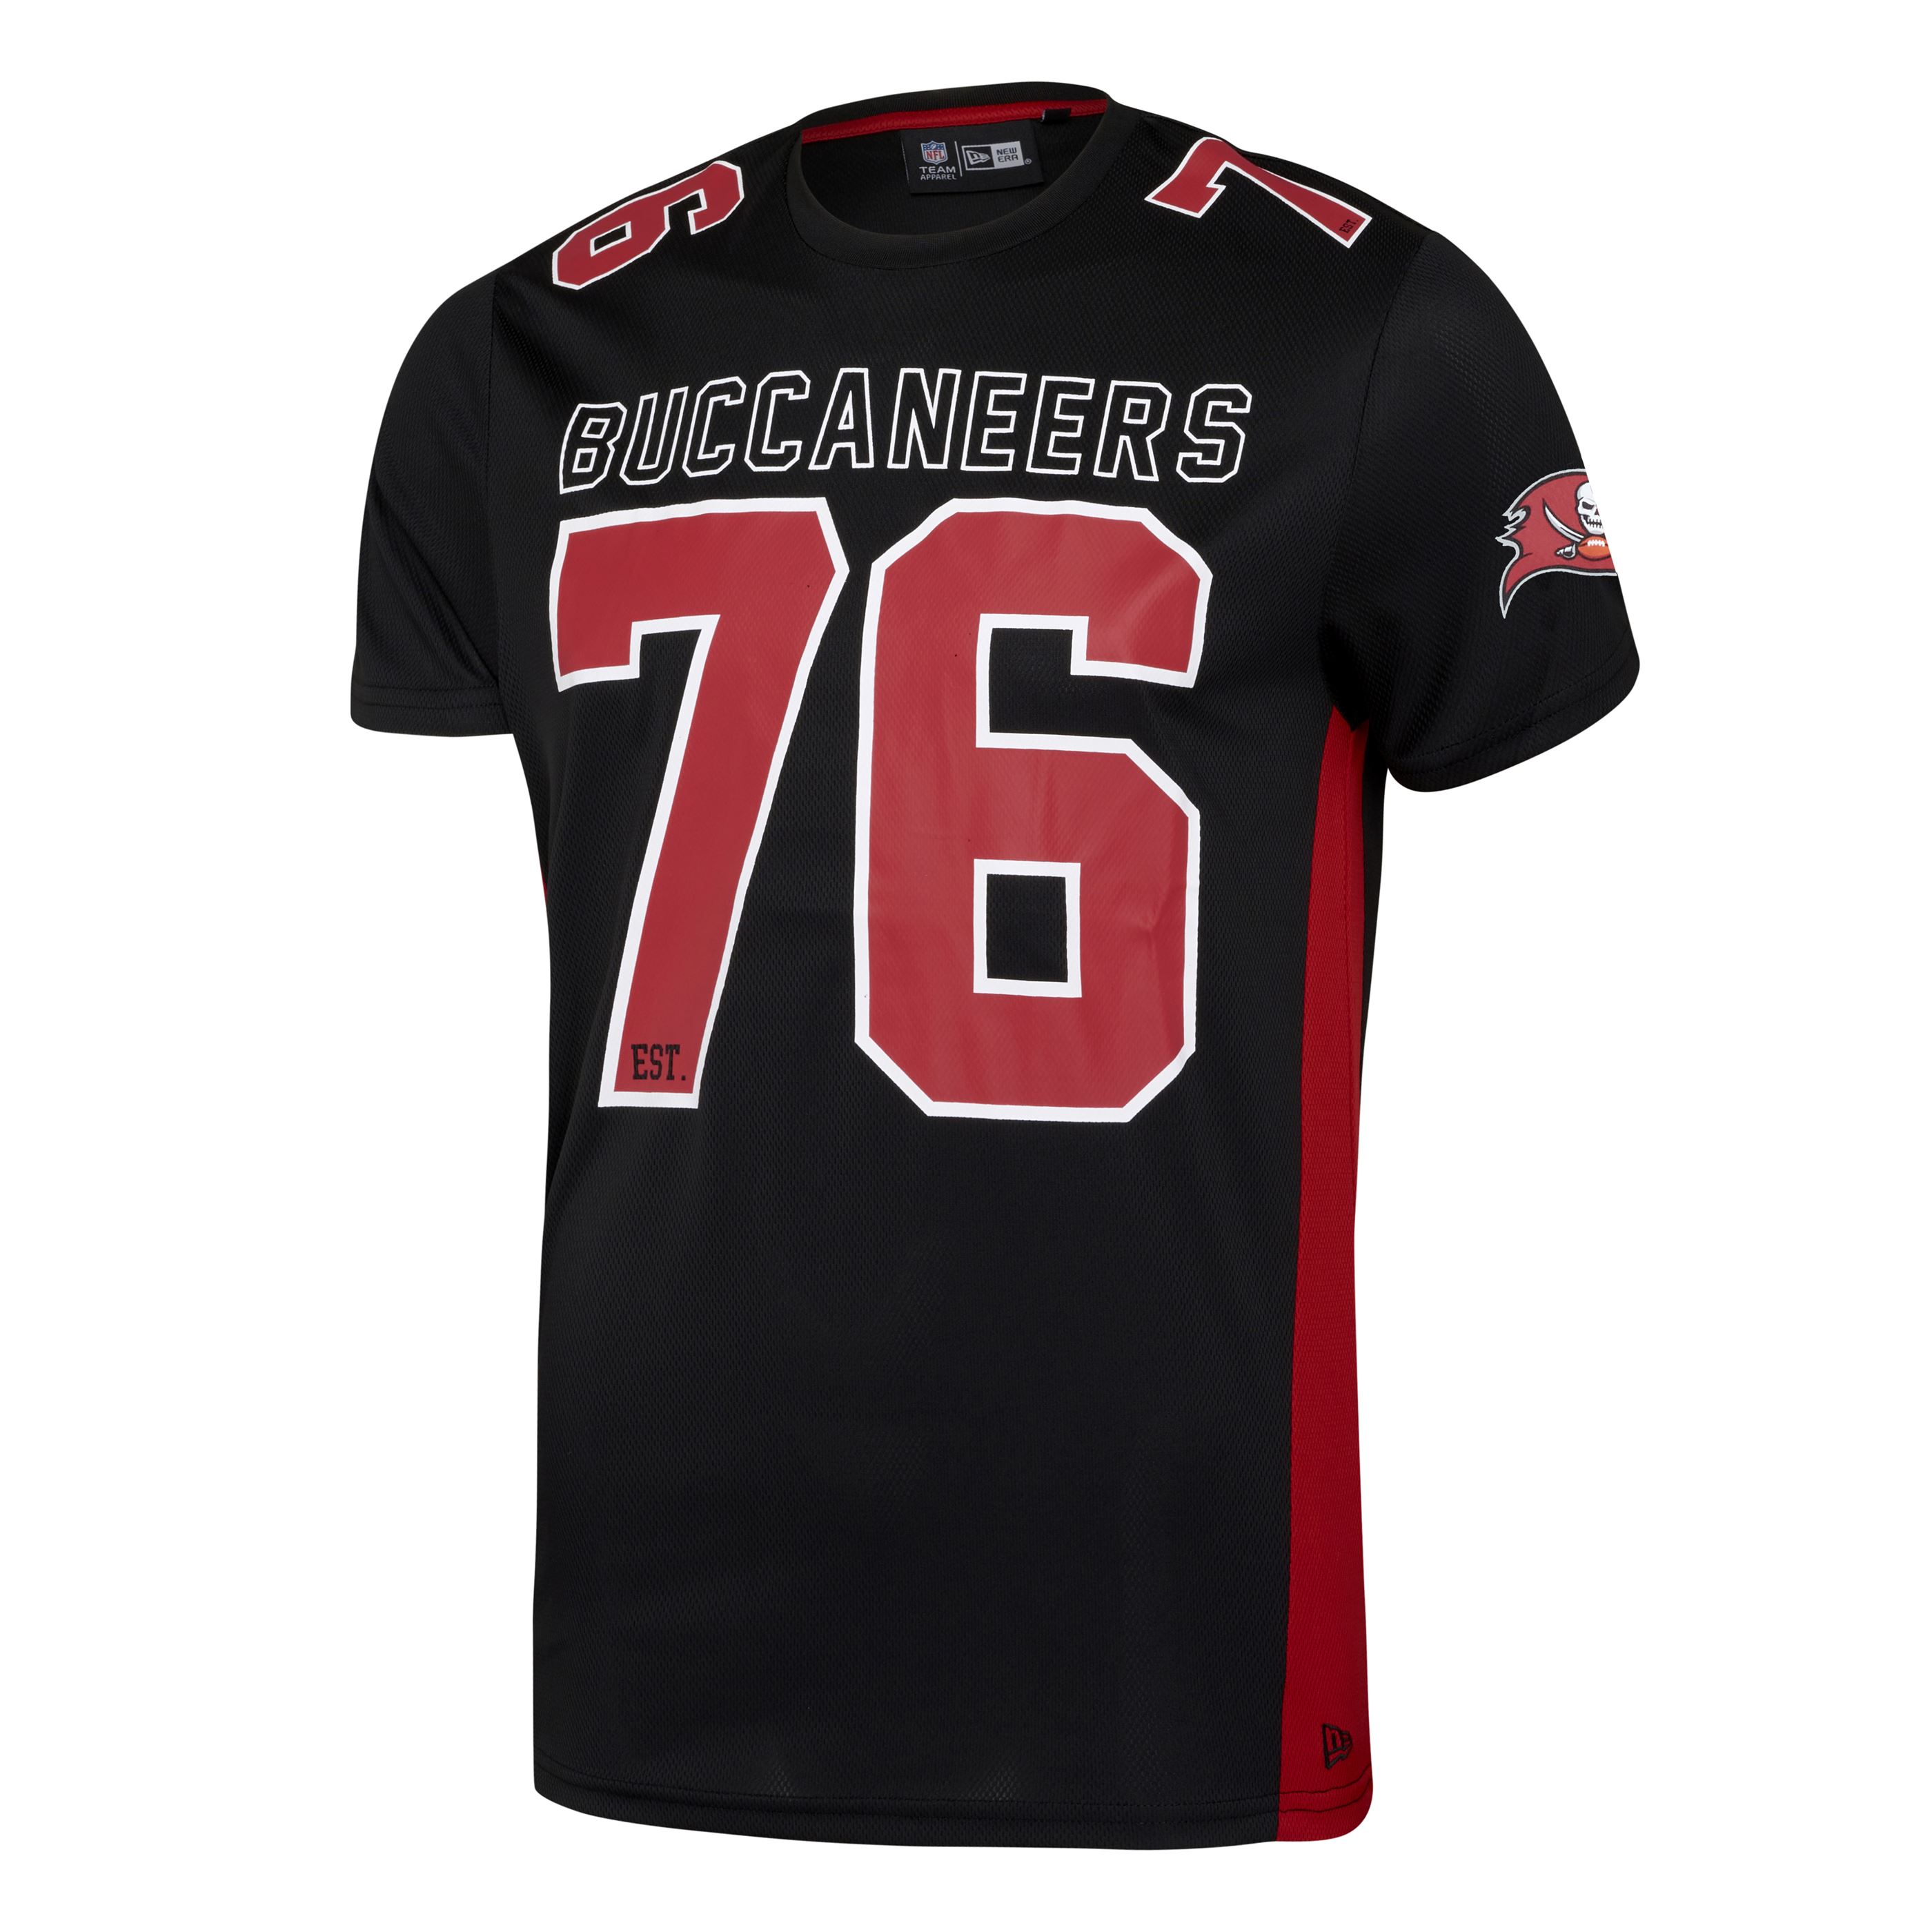 Tampa Bay Buccaneers NFL Established Number Mesh Tee Black T-Shirt New Era